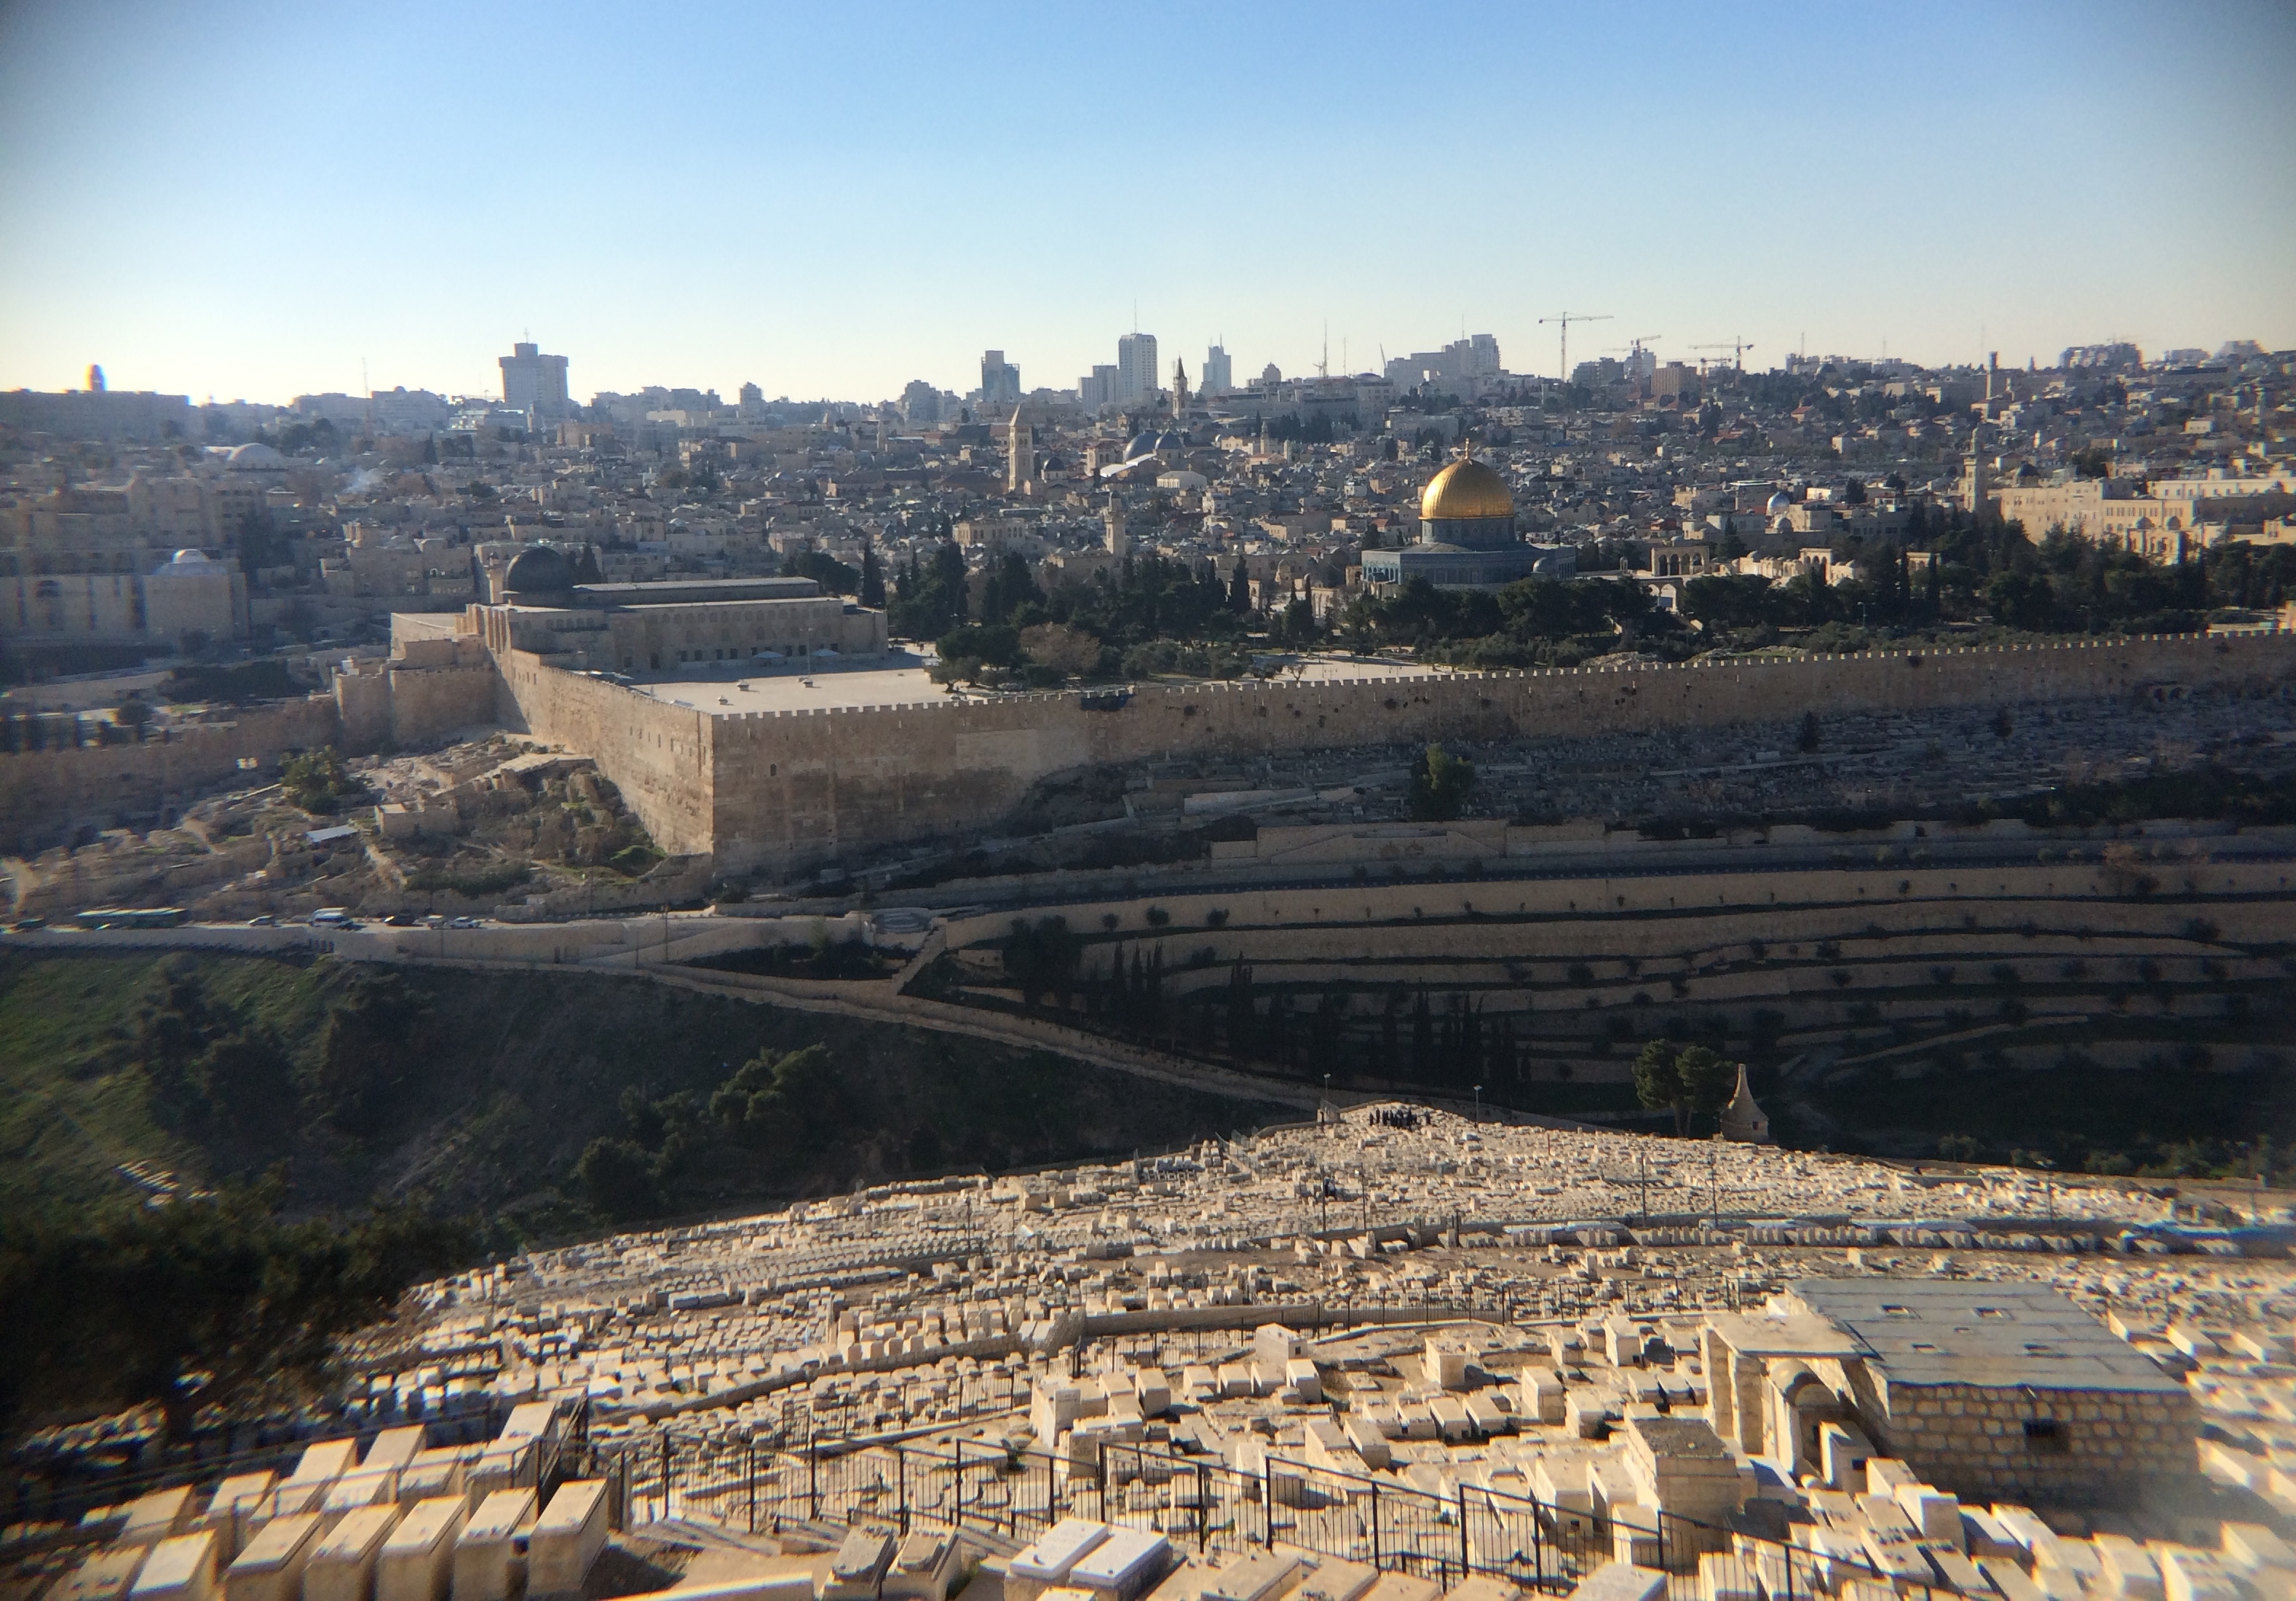 My Visit to Israel (Part 4)